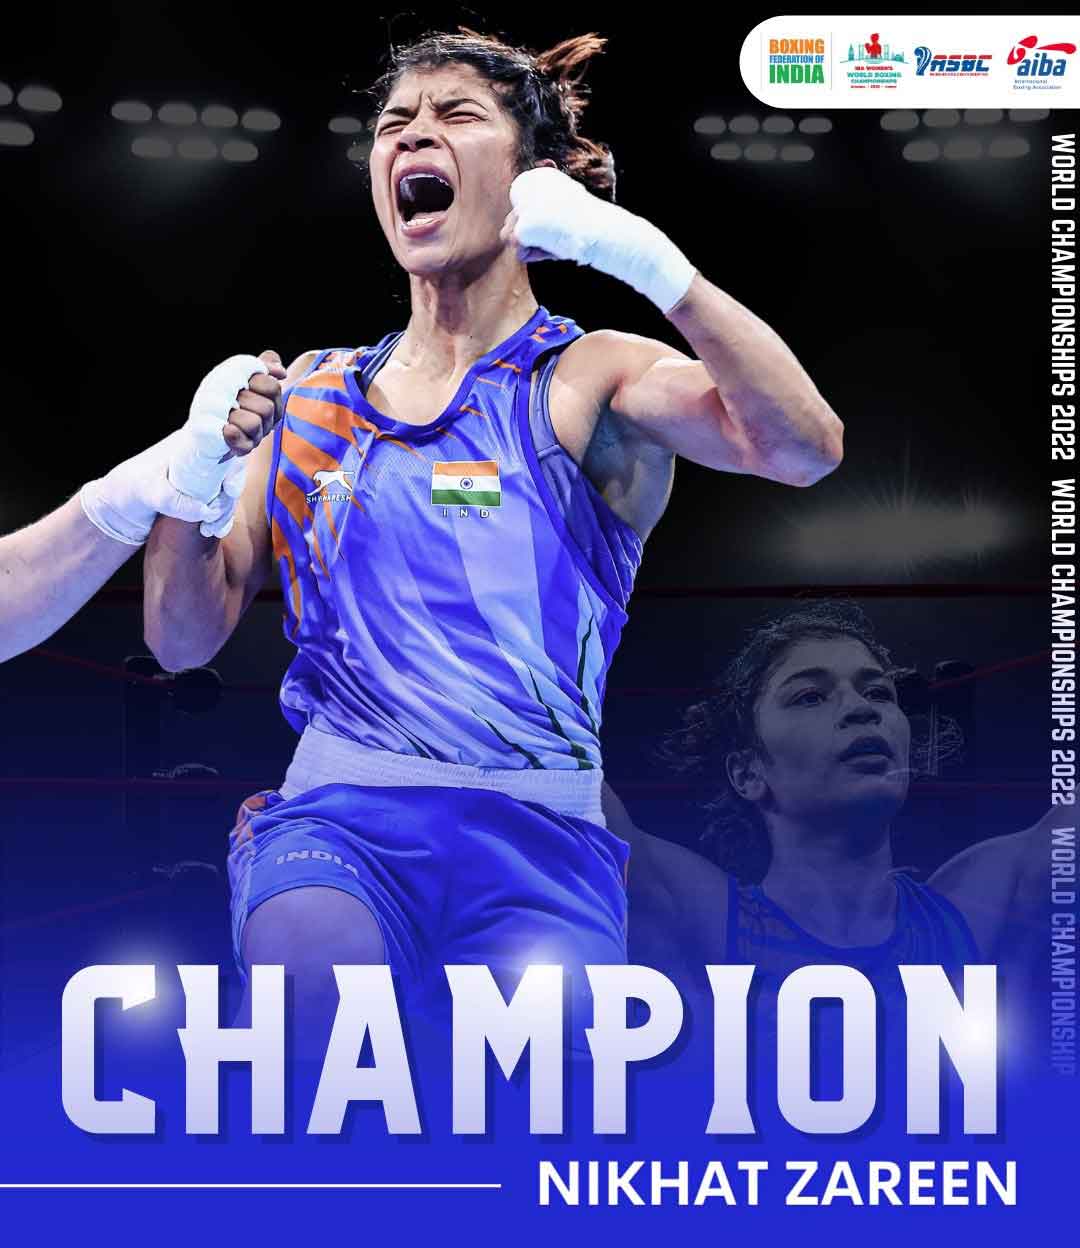 Nikhat Zareen wins the Gold in Women’s World Boxing Championship